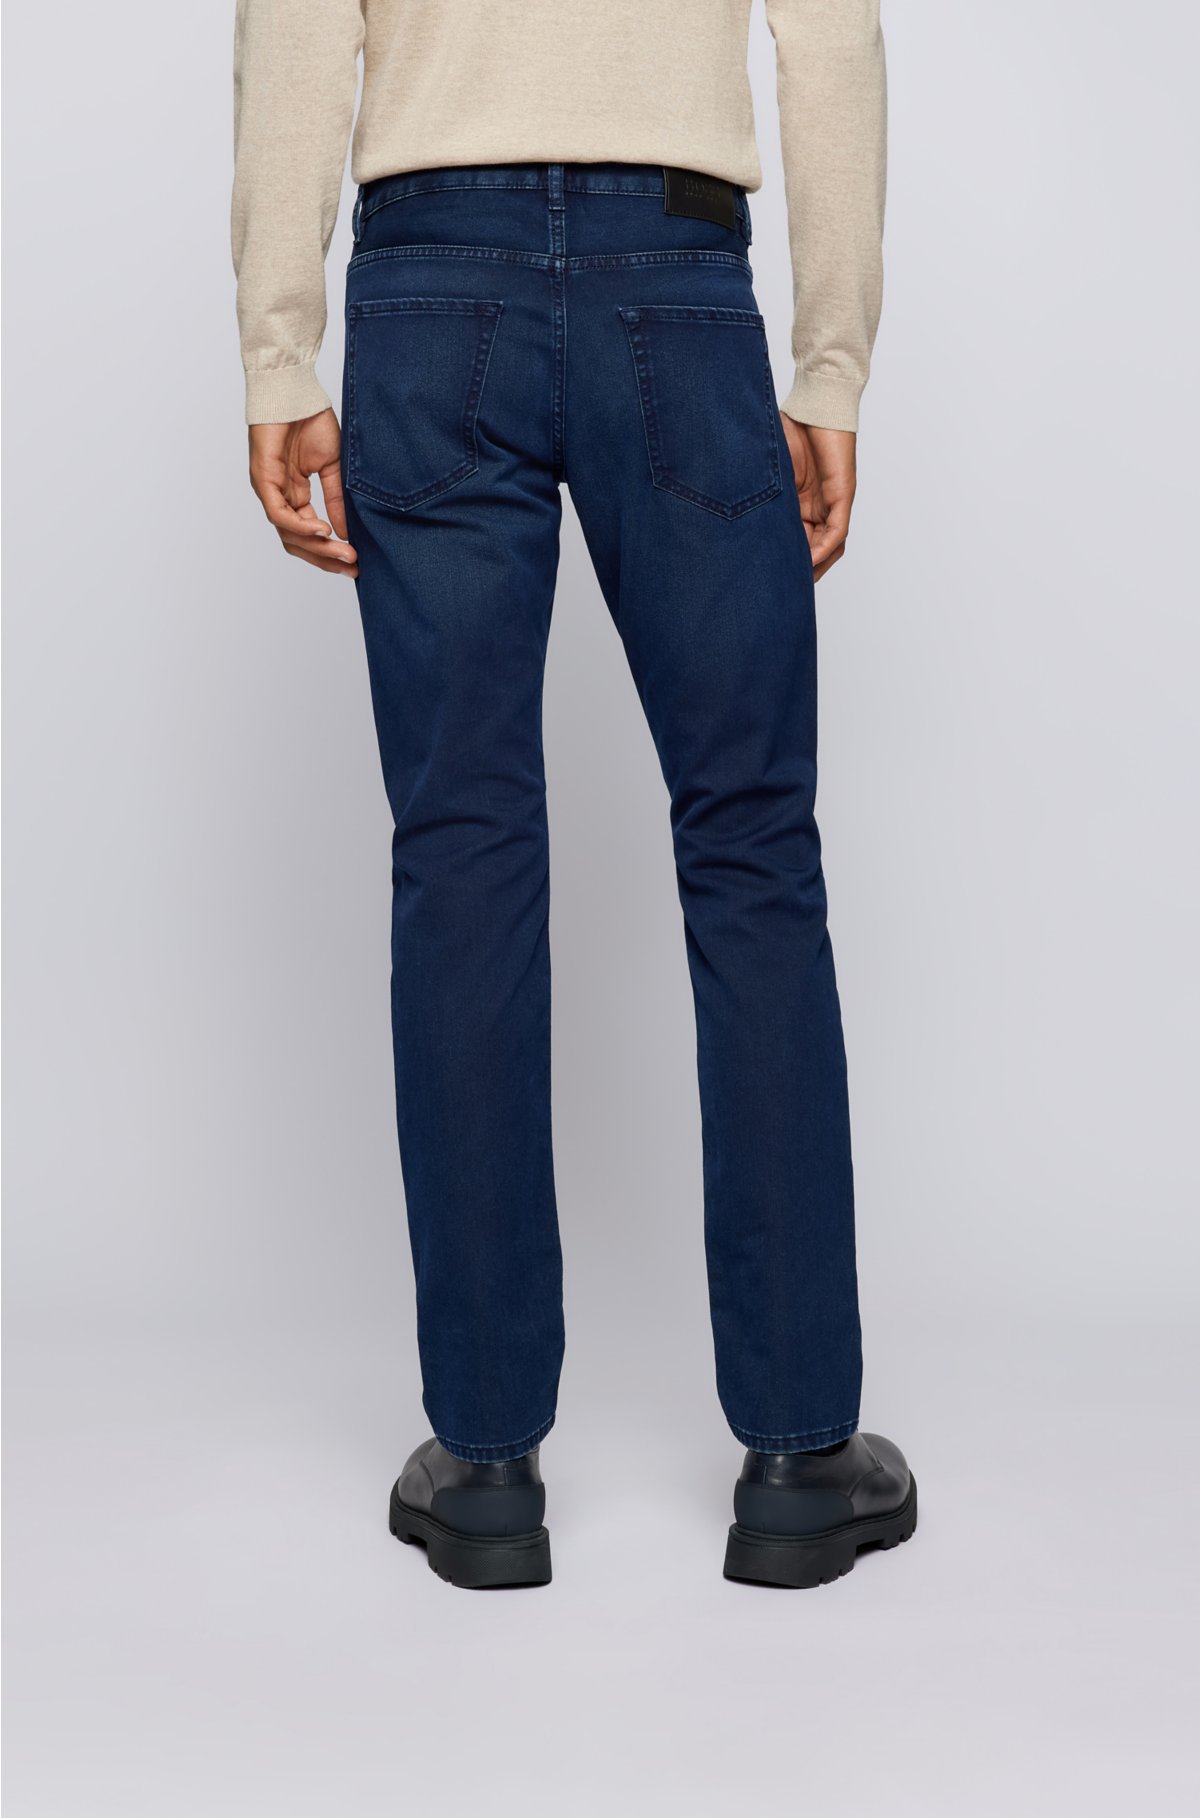 Distrahere Thrust Rudyard Kipling BOSS - Slim-fit jeans in dark-blue comfort-stretch Italian denim